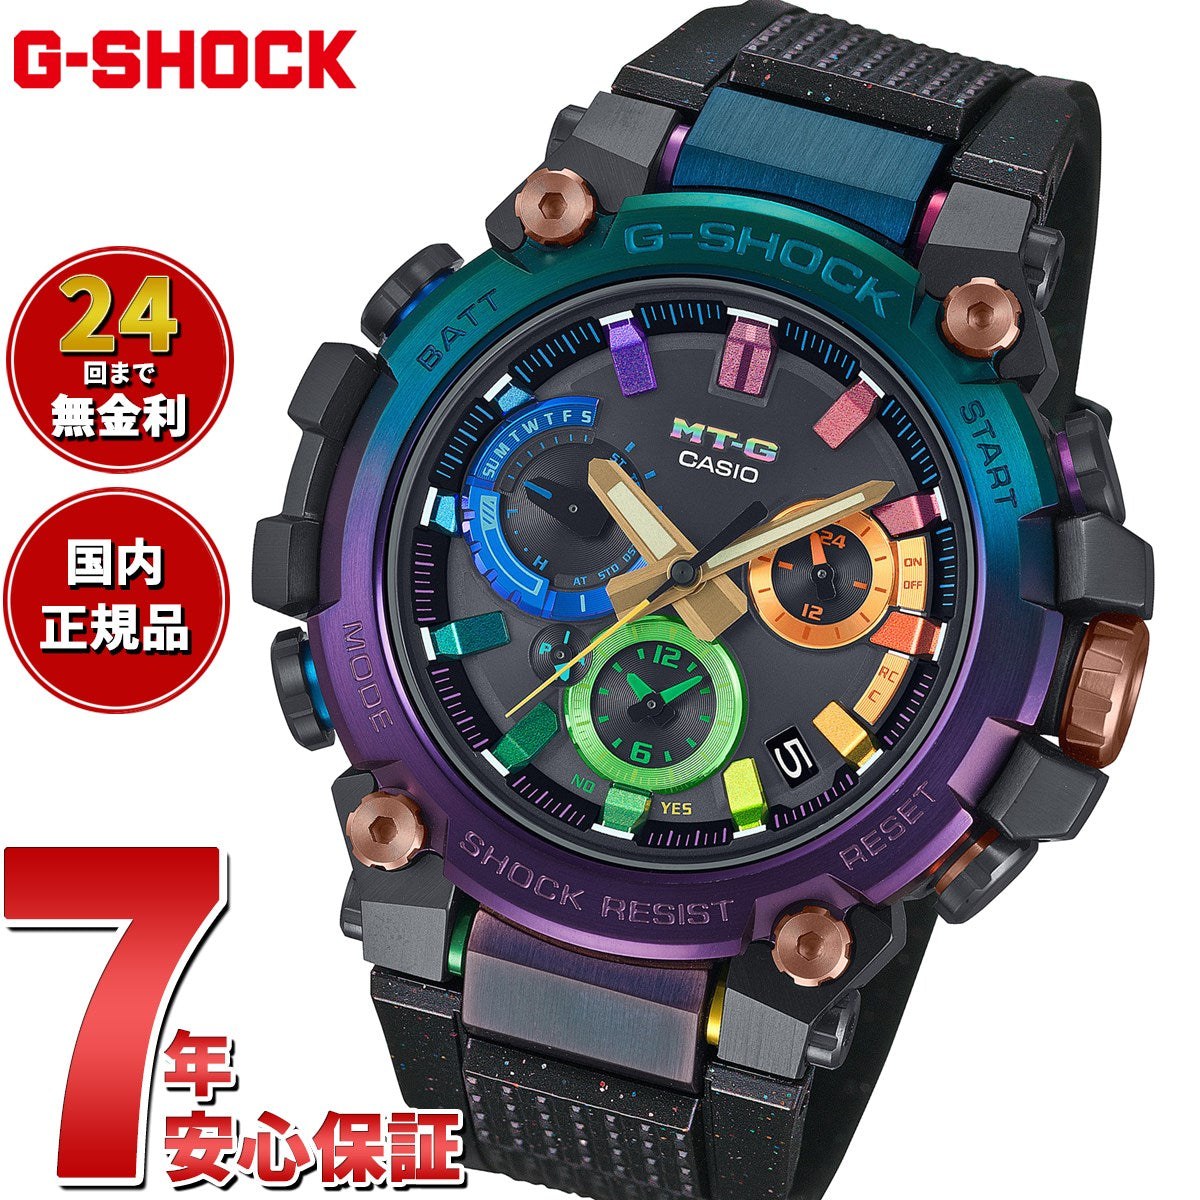 MT-G G-SHOCK 電波 ソーラー 電波時計 カシオ Gショック CASIO 限定モデル 腕時計 メンズ スマートフォンリンク タフソ –  neel selectshop